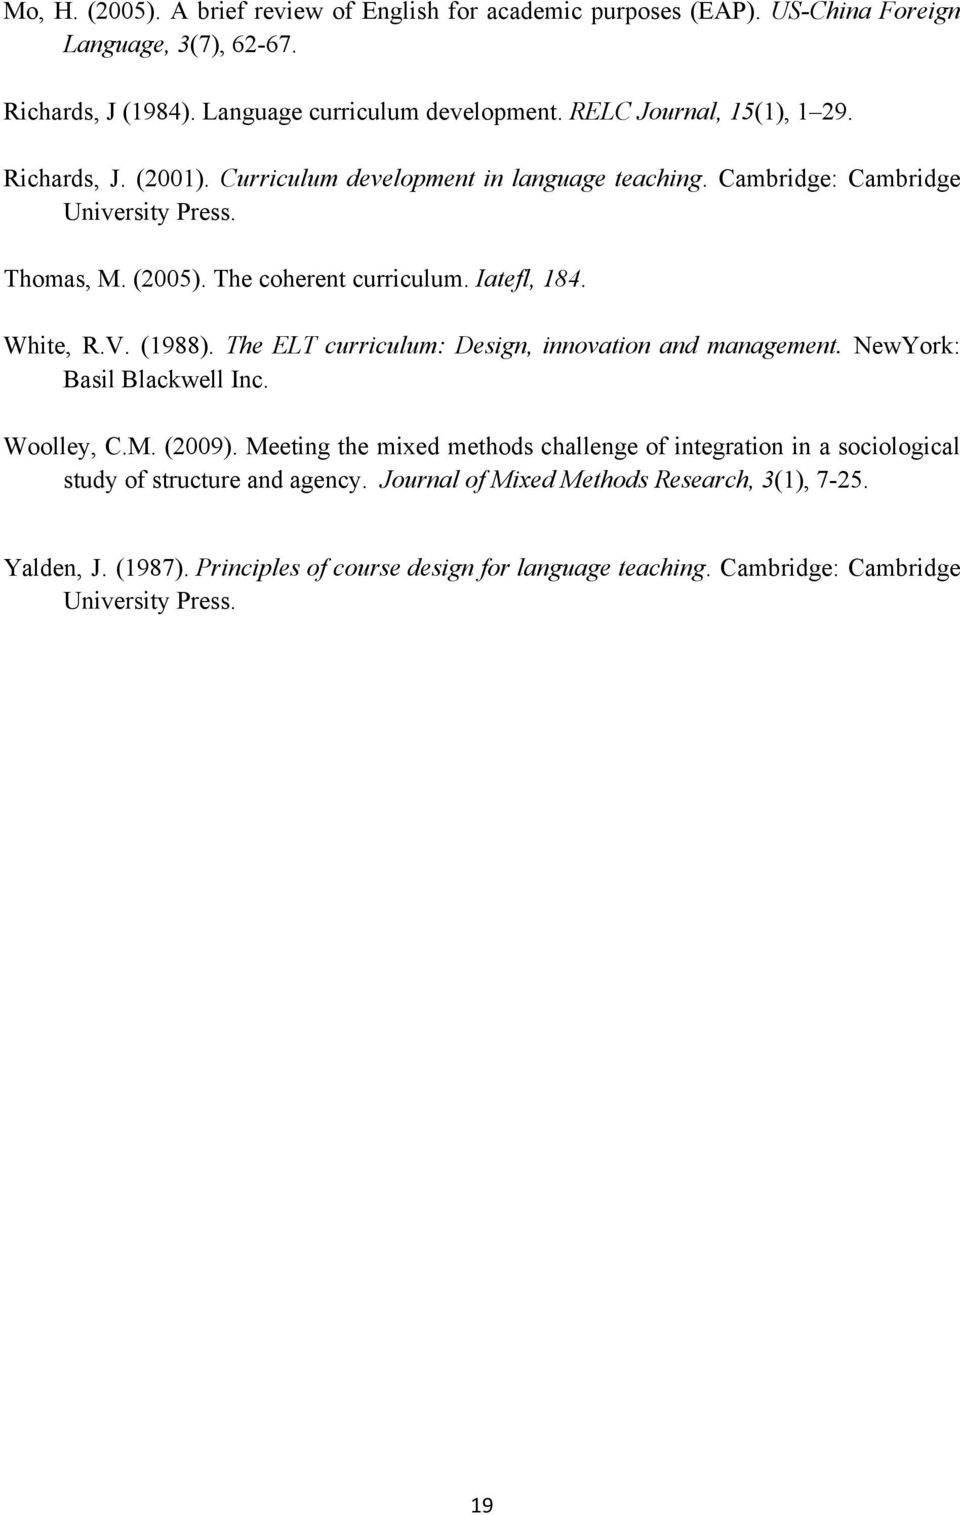 Iatefl, 184. White, R.V. (1988). The ELT curriculum: Design, innovation and management. NewYork: Basil Blackwell Inc. Woolley, C.M. (2009).